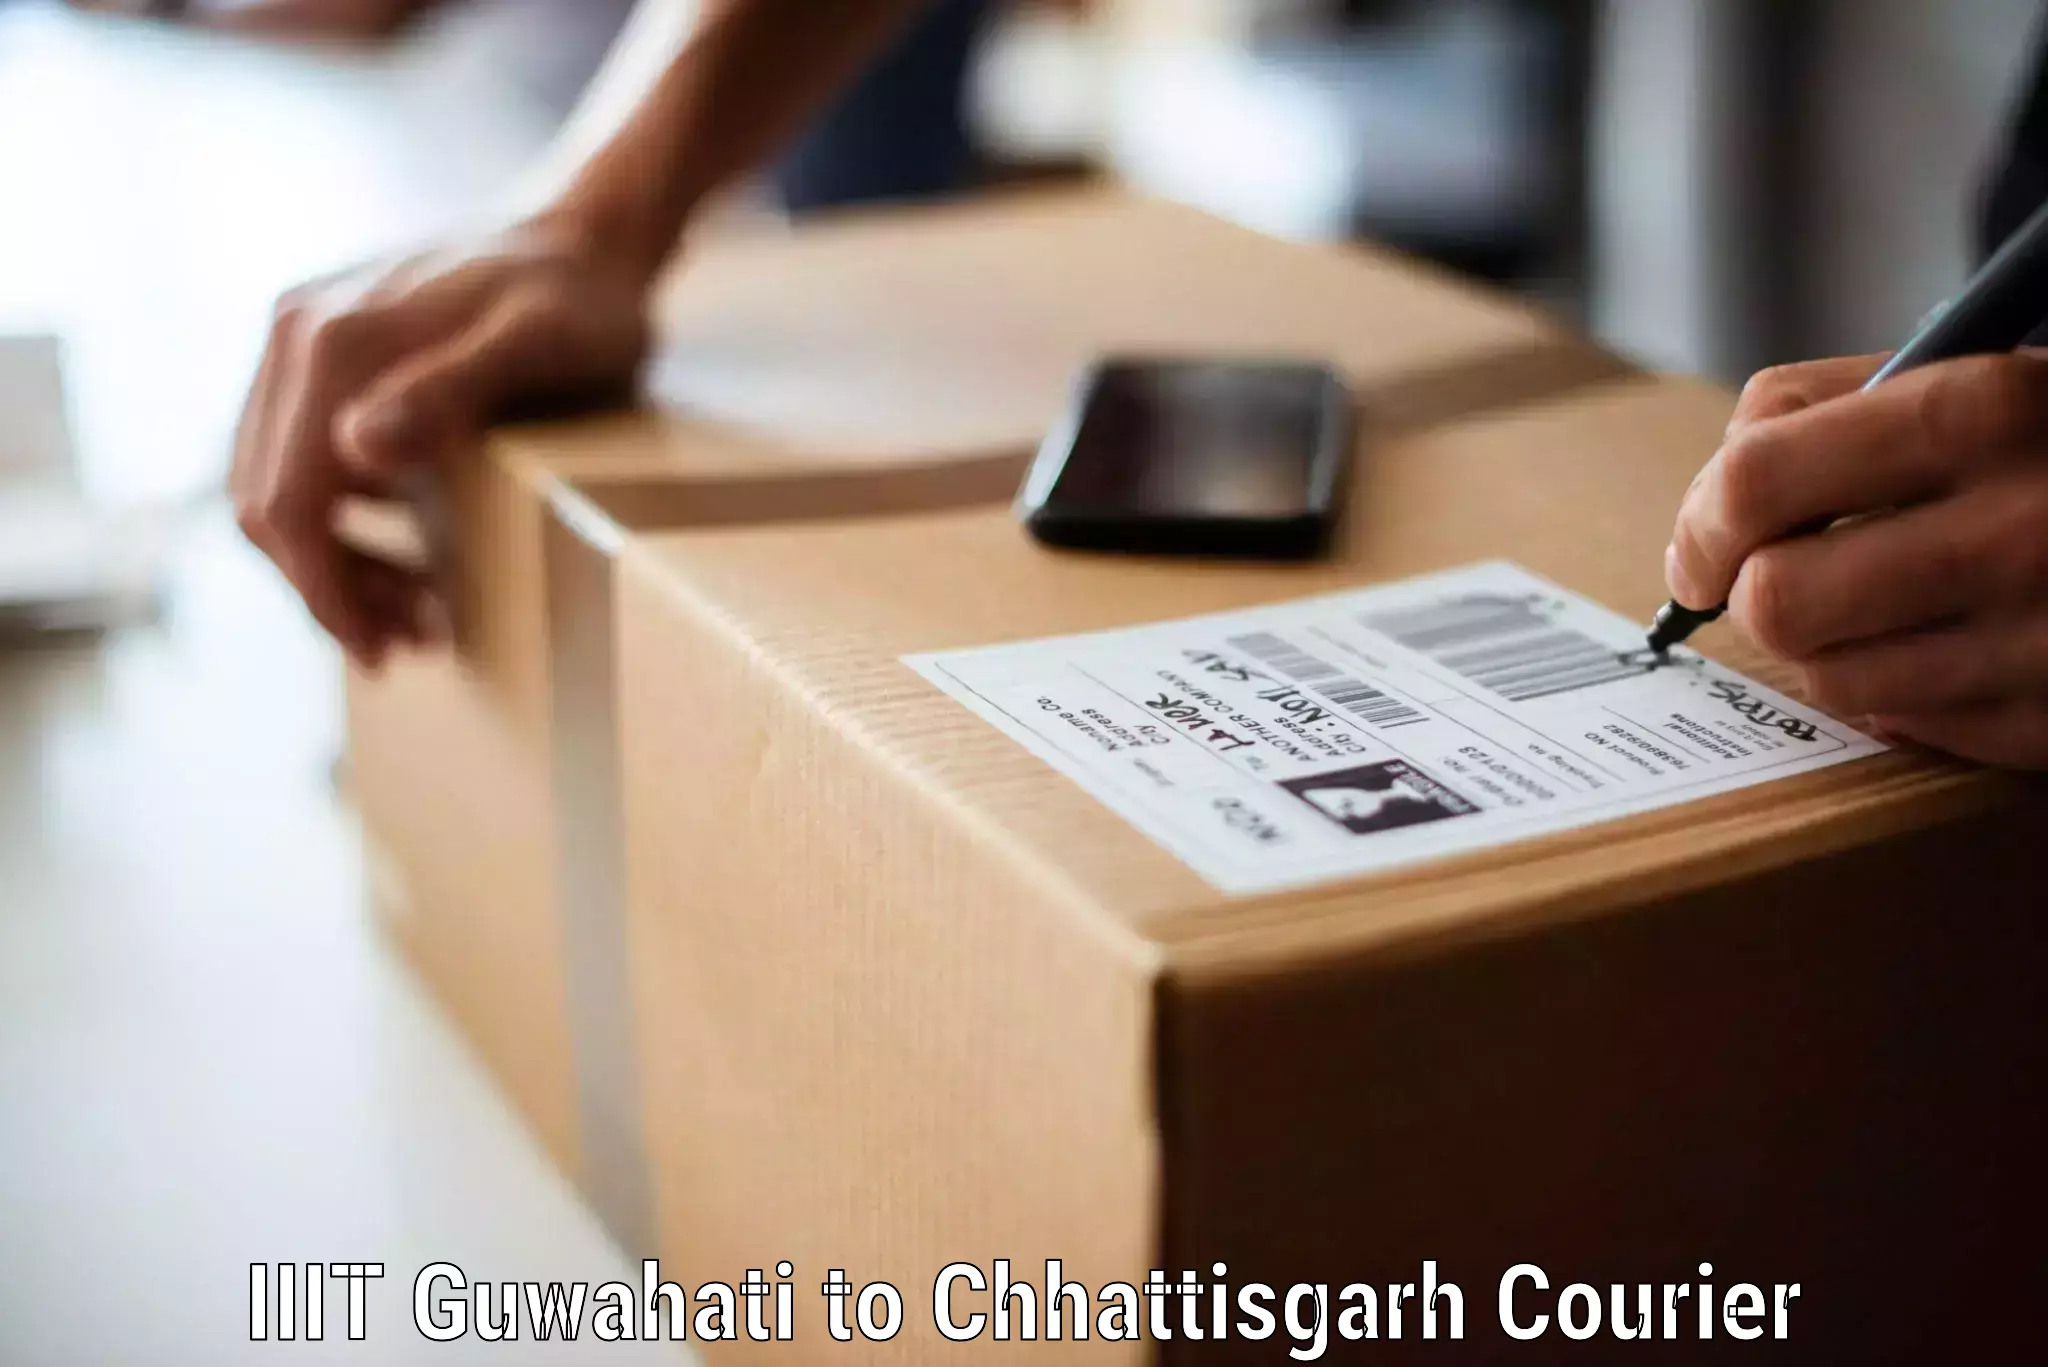 Trusted relocation experts IIIT Guwahati to Korea Chhattisgarh